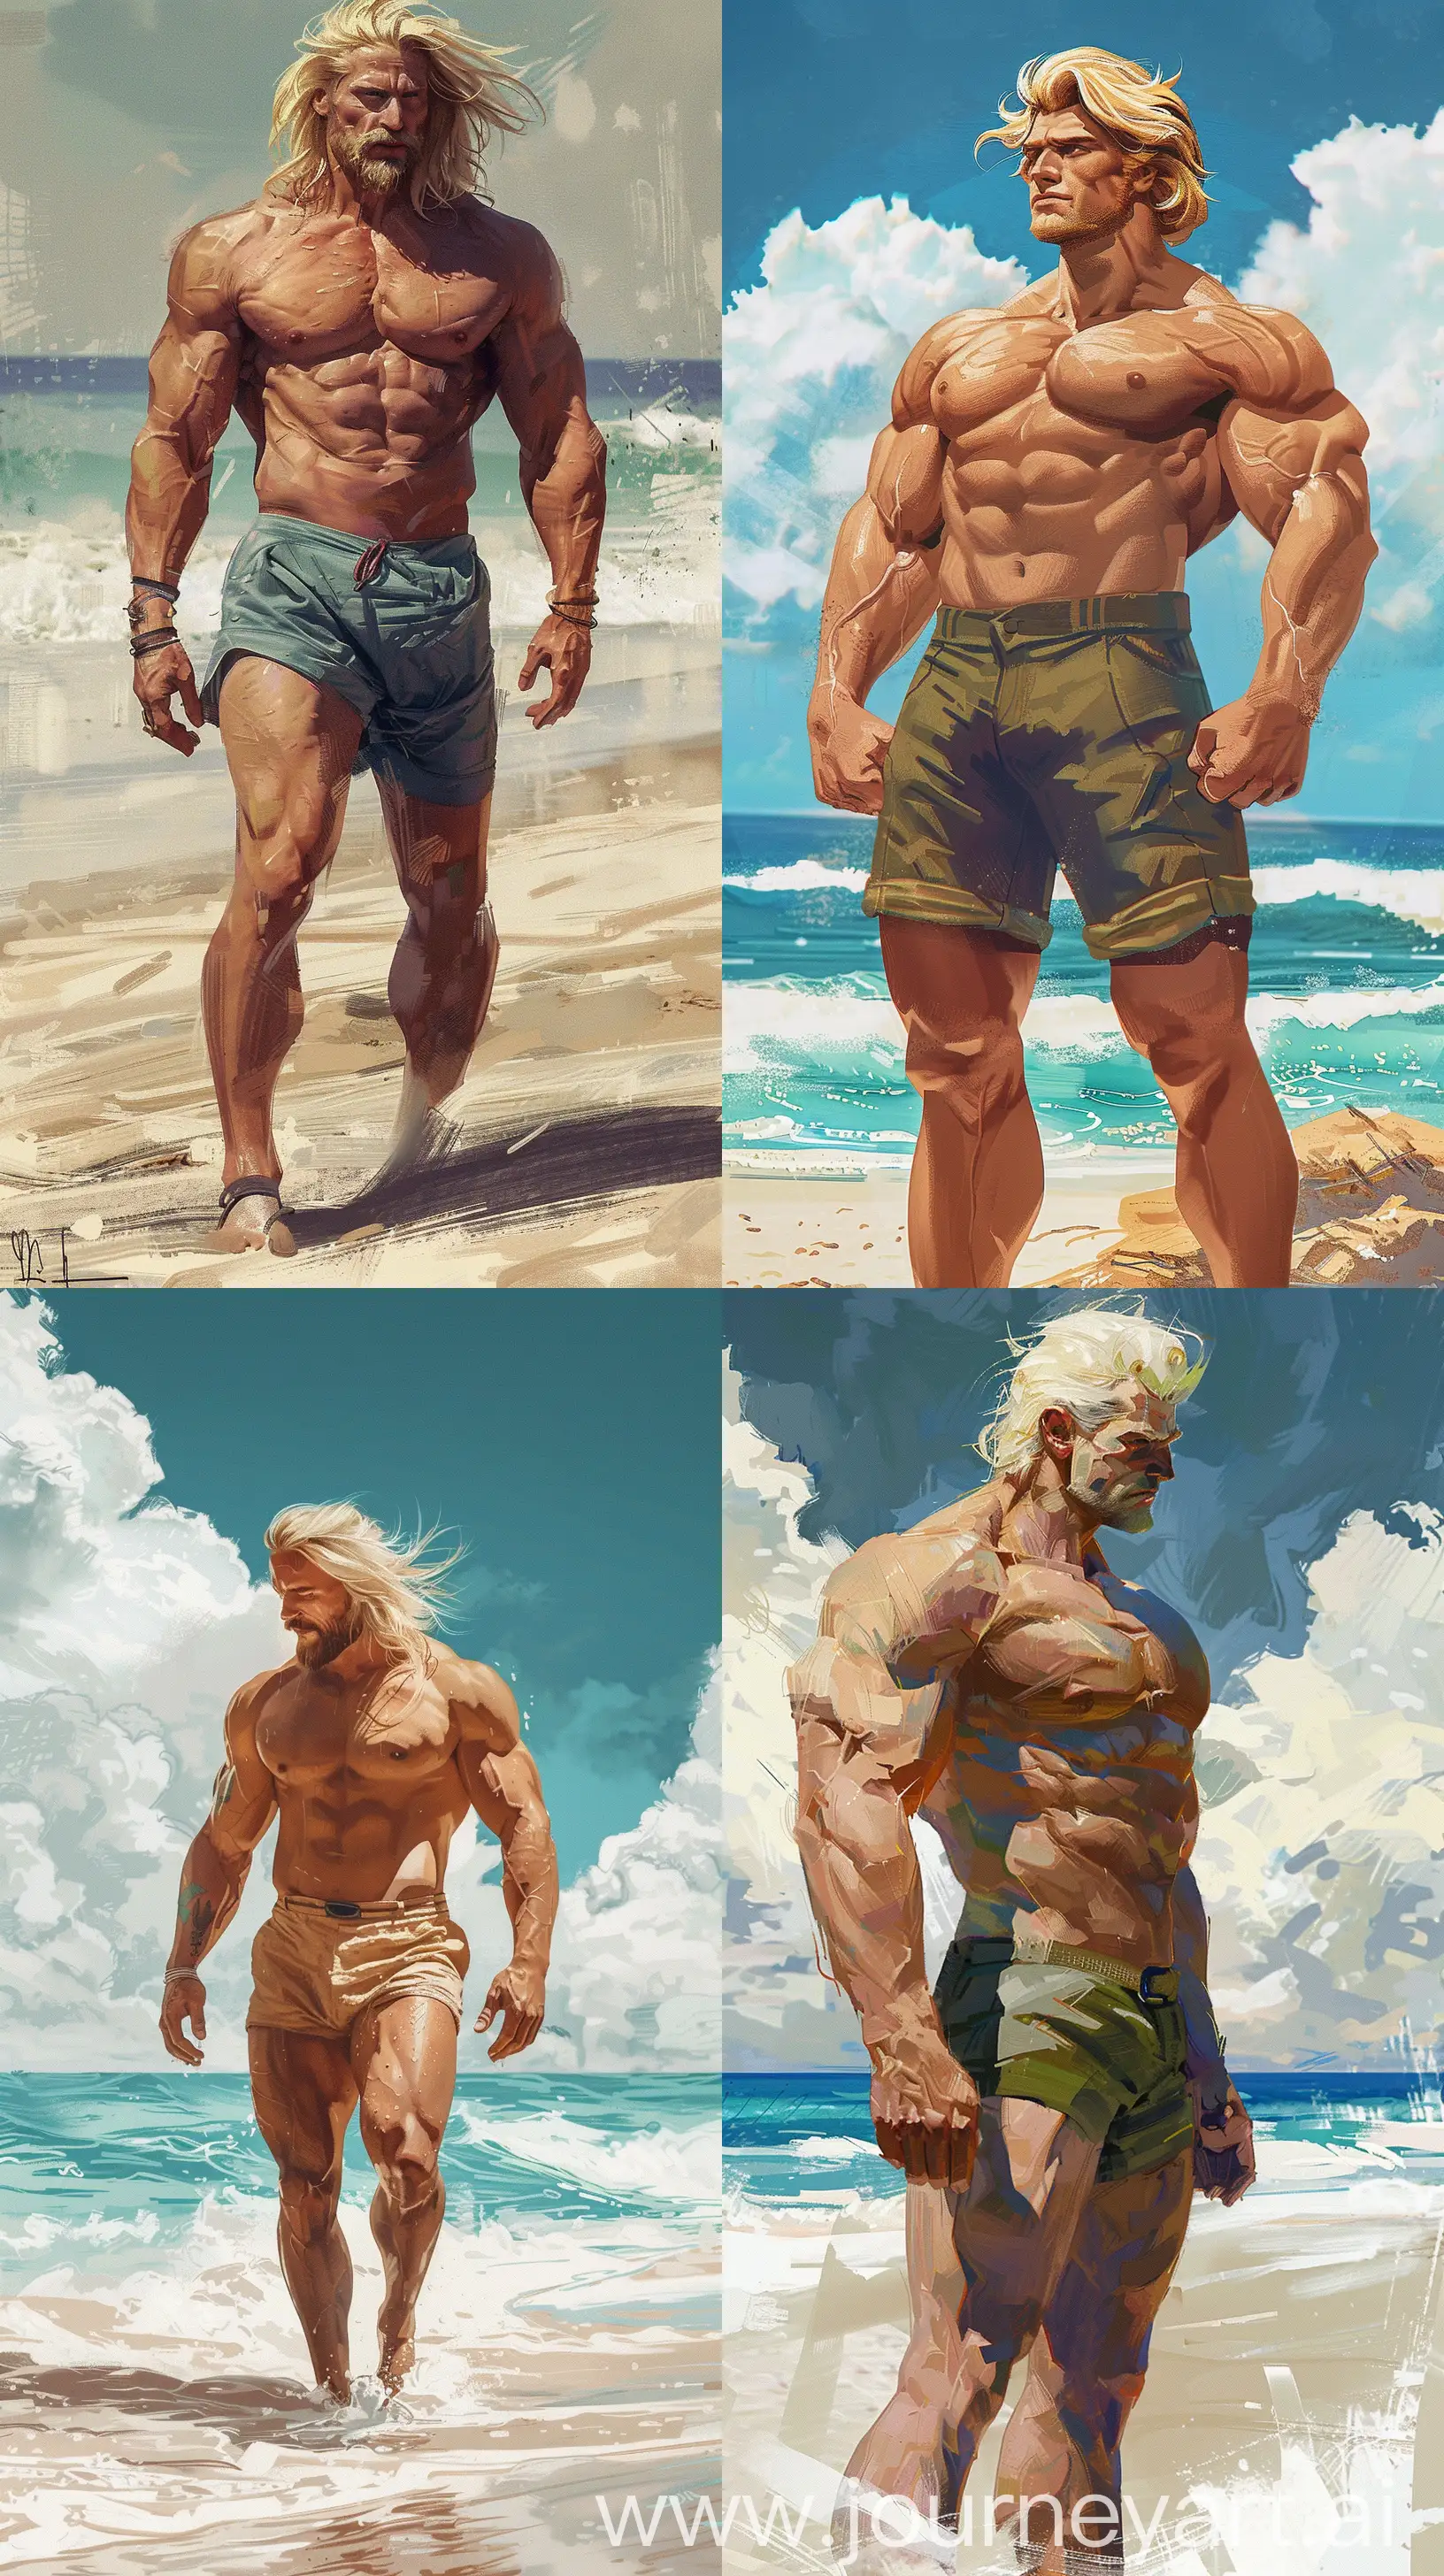 50YearOld-Handsome-Blonde-Man-Exuding-Strength-at-Beach-Jean-Jullien-Art-Style